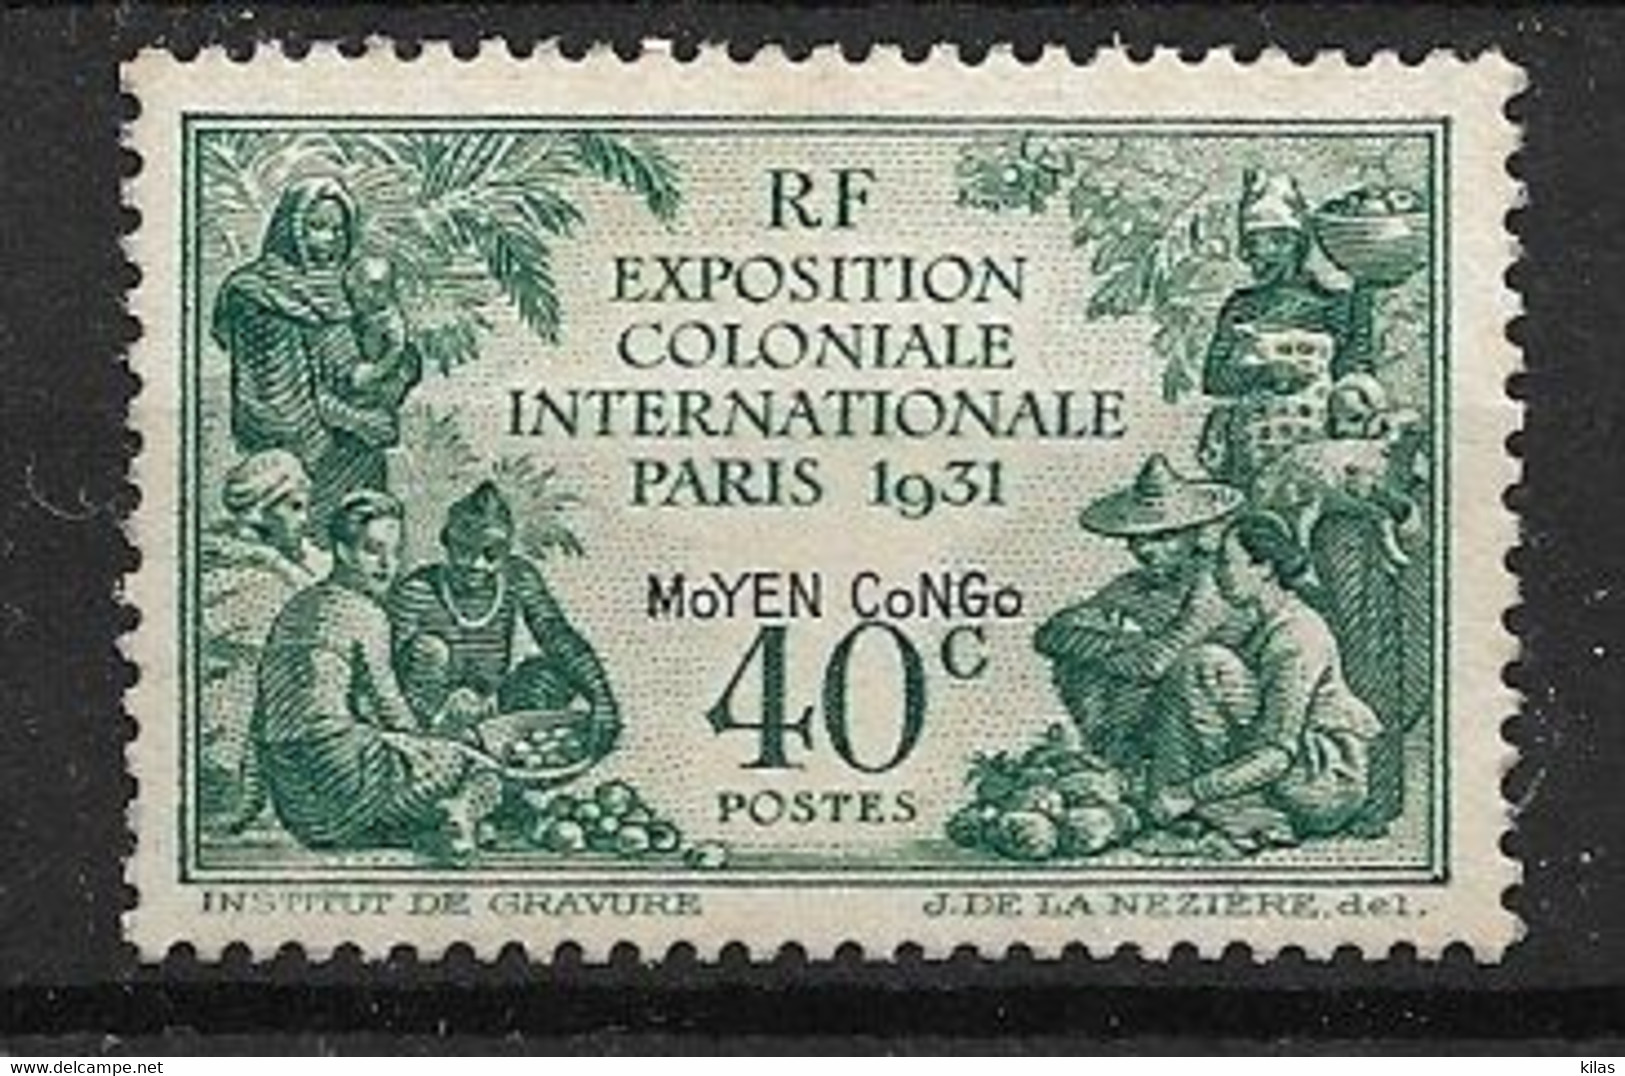 MOYEN-CONGO 1931  PARIS INTERNATIONAL EXHIBITION NO GUM - Mauricio (1968-...)